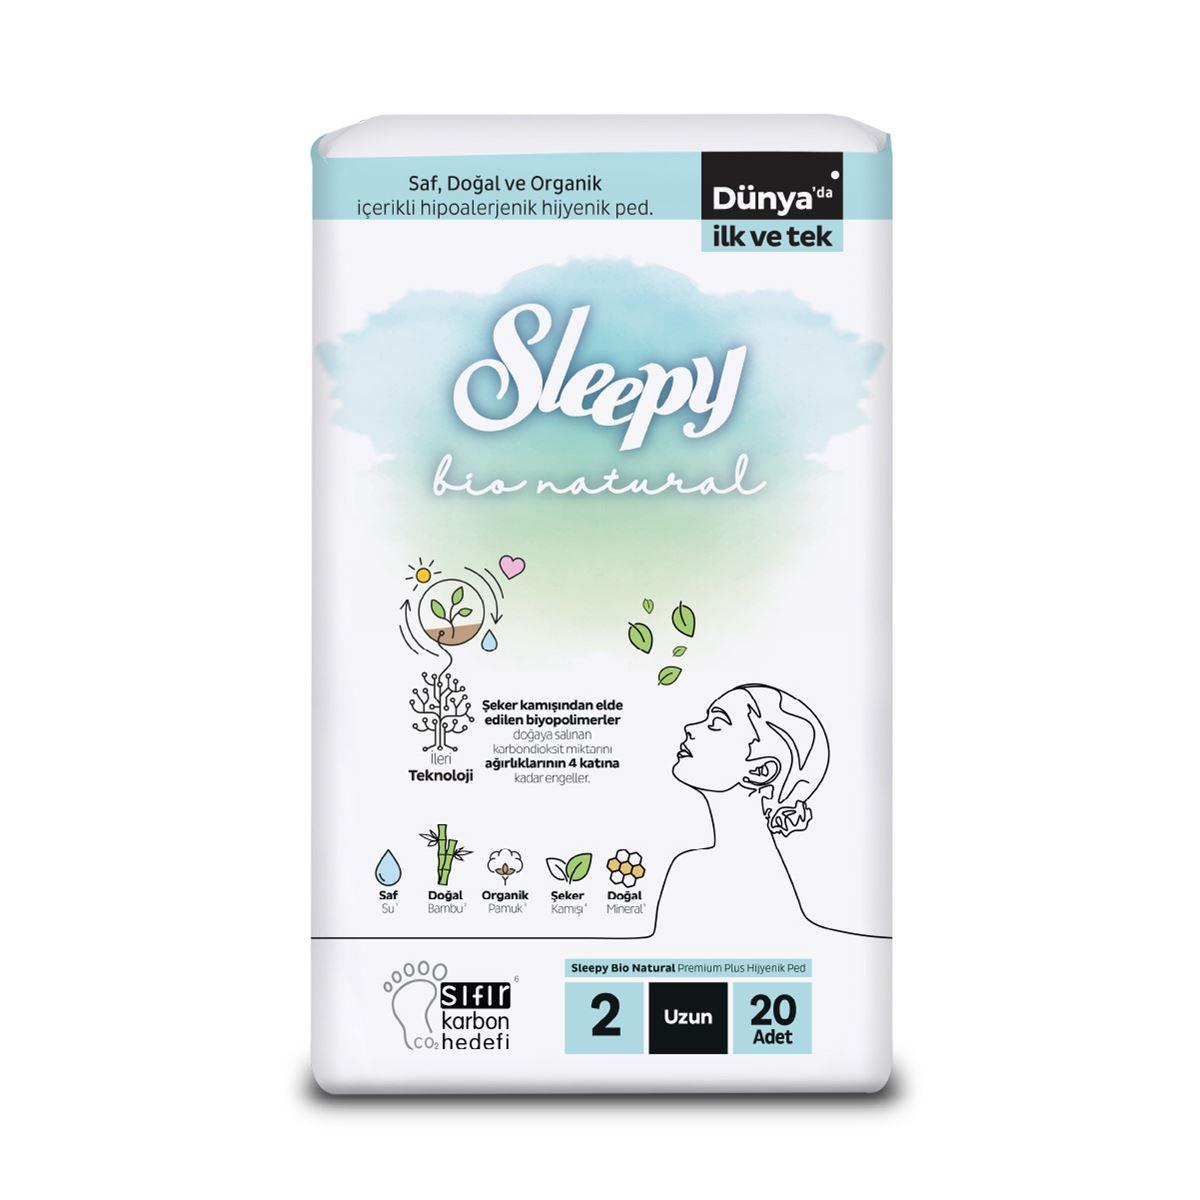 Sleepy Bio Natural Premium Plus Hijyenik Ped Uzun 20x5 100 Adet Ped